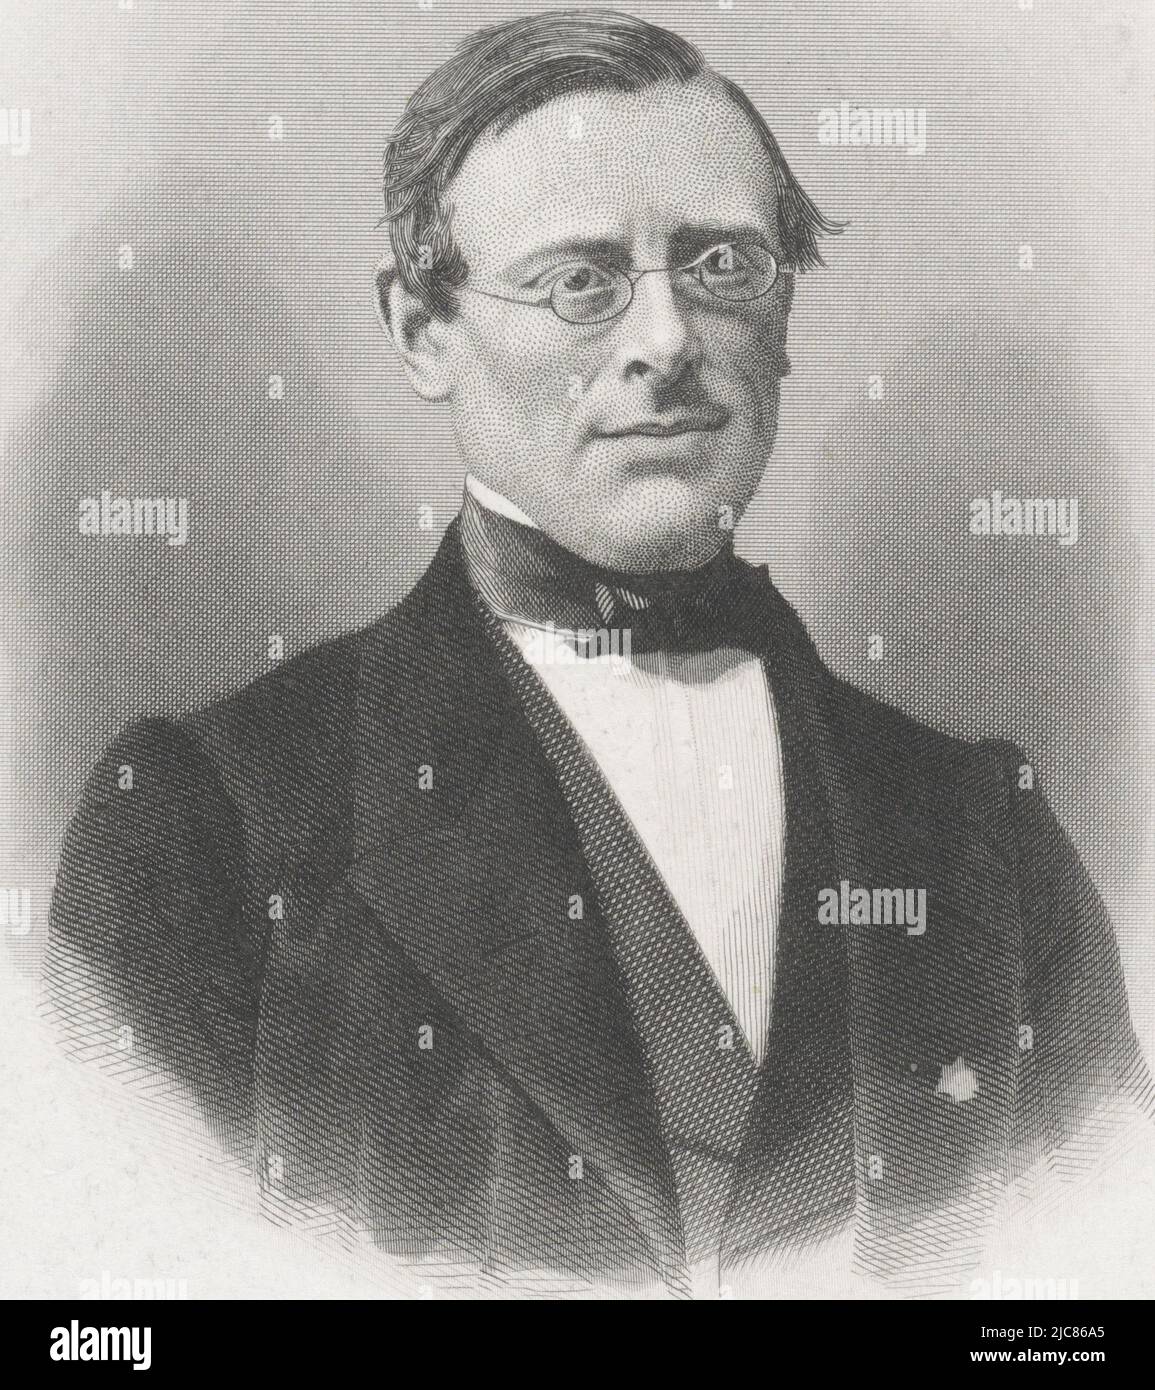 Portrait of Reinhart Pieter Anne Dozy, print maker: Dirk Jurriaan Sluyter, (mentioned on object), Amsterdam, 1879, paper, steel engraving, etching, h 179 mm - w 137 mm Stock Photo